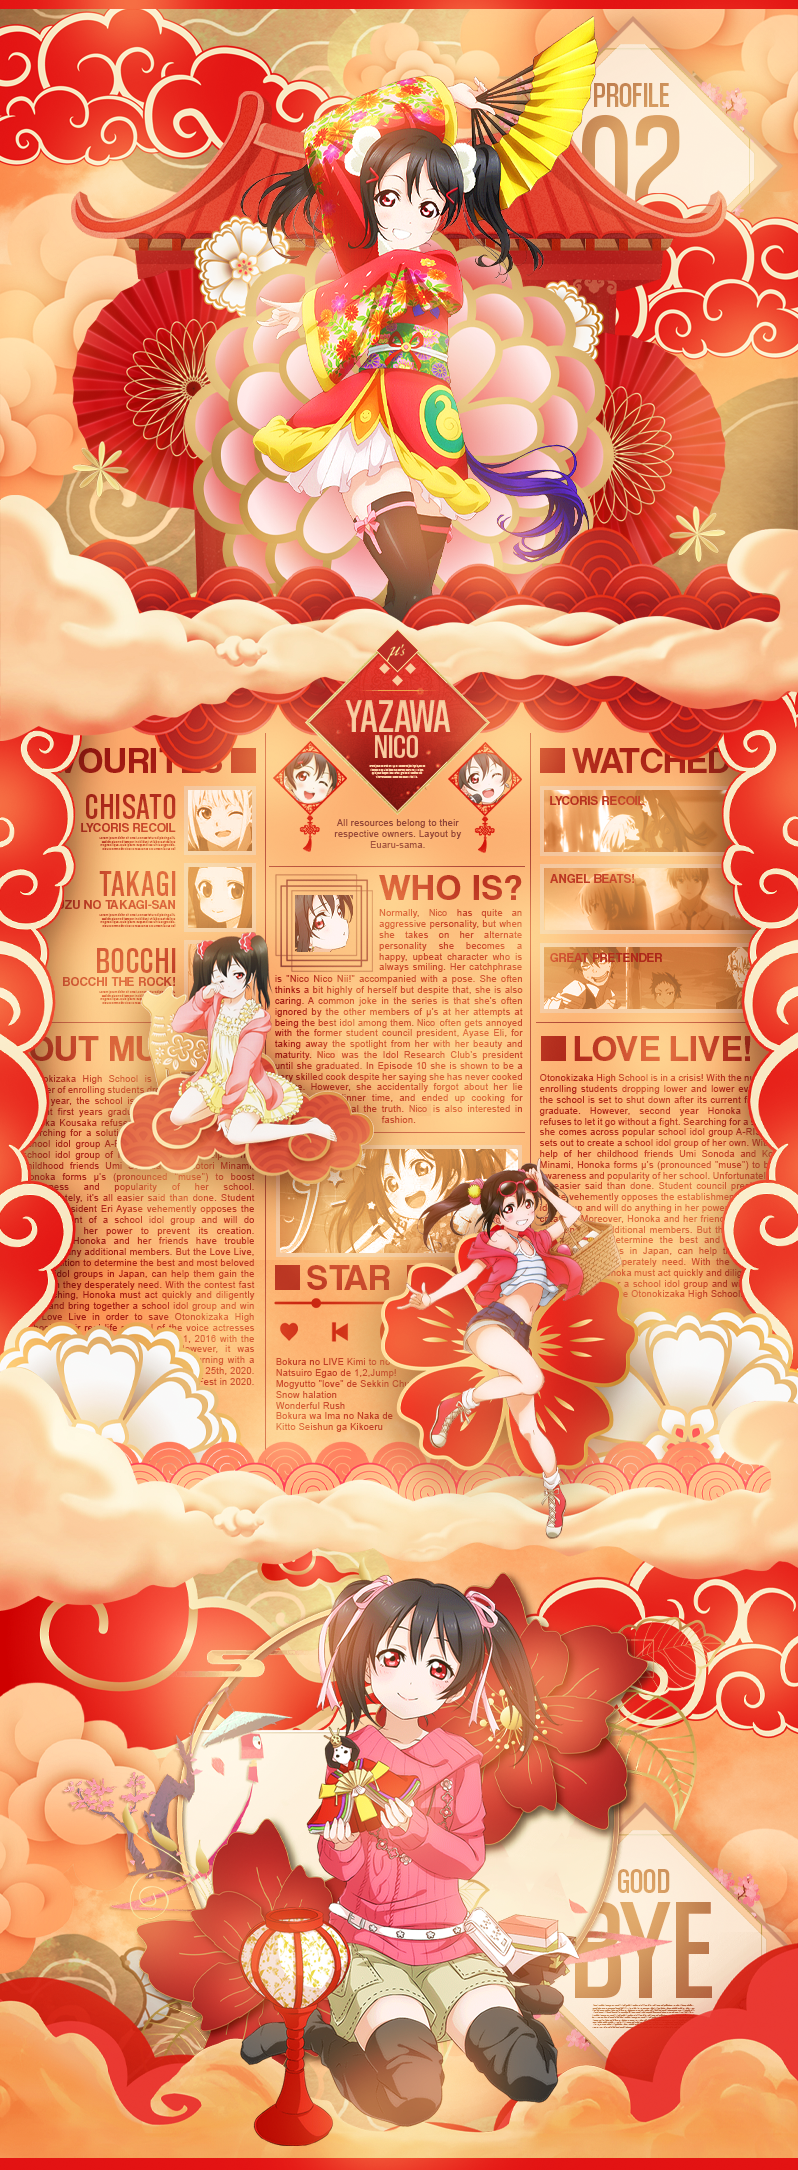 2ND MAL PROFILE - Love Live! - Yazawa Nico by Euaru-sama on DeviantArt